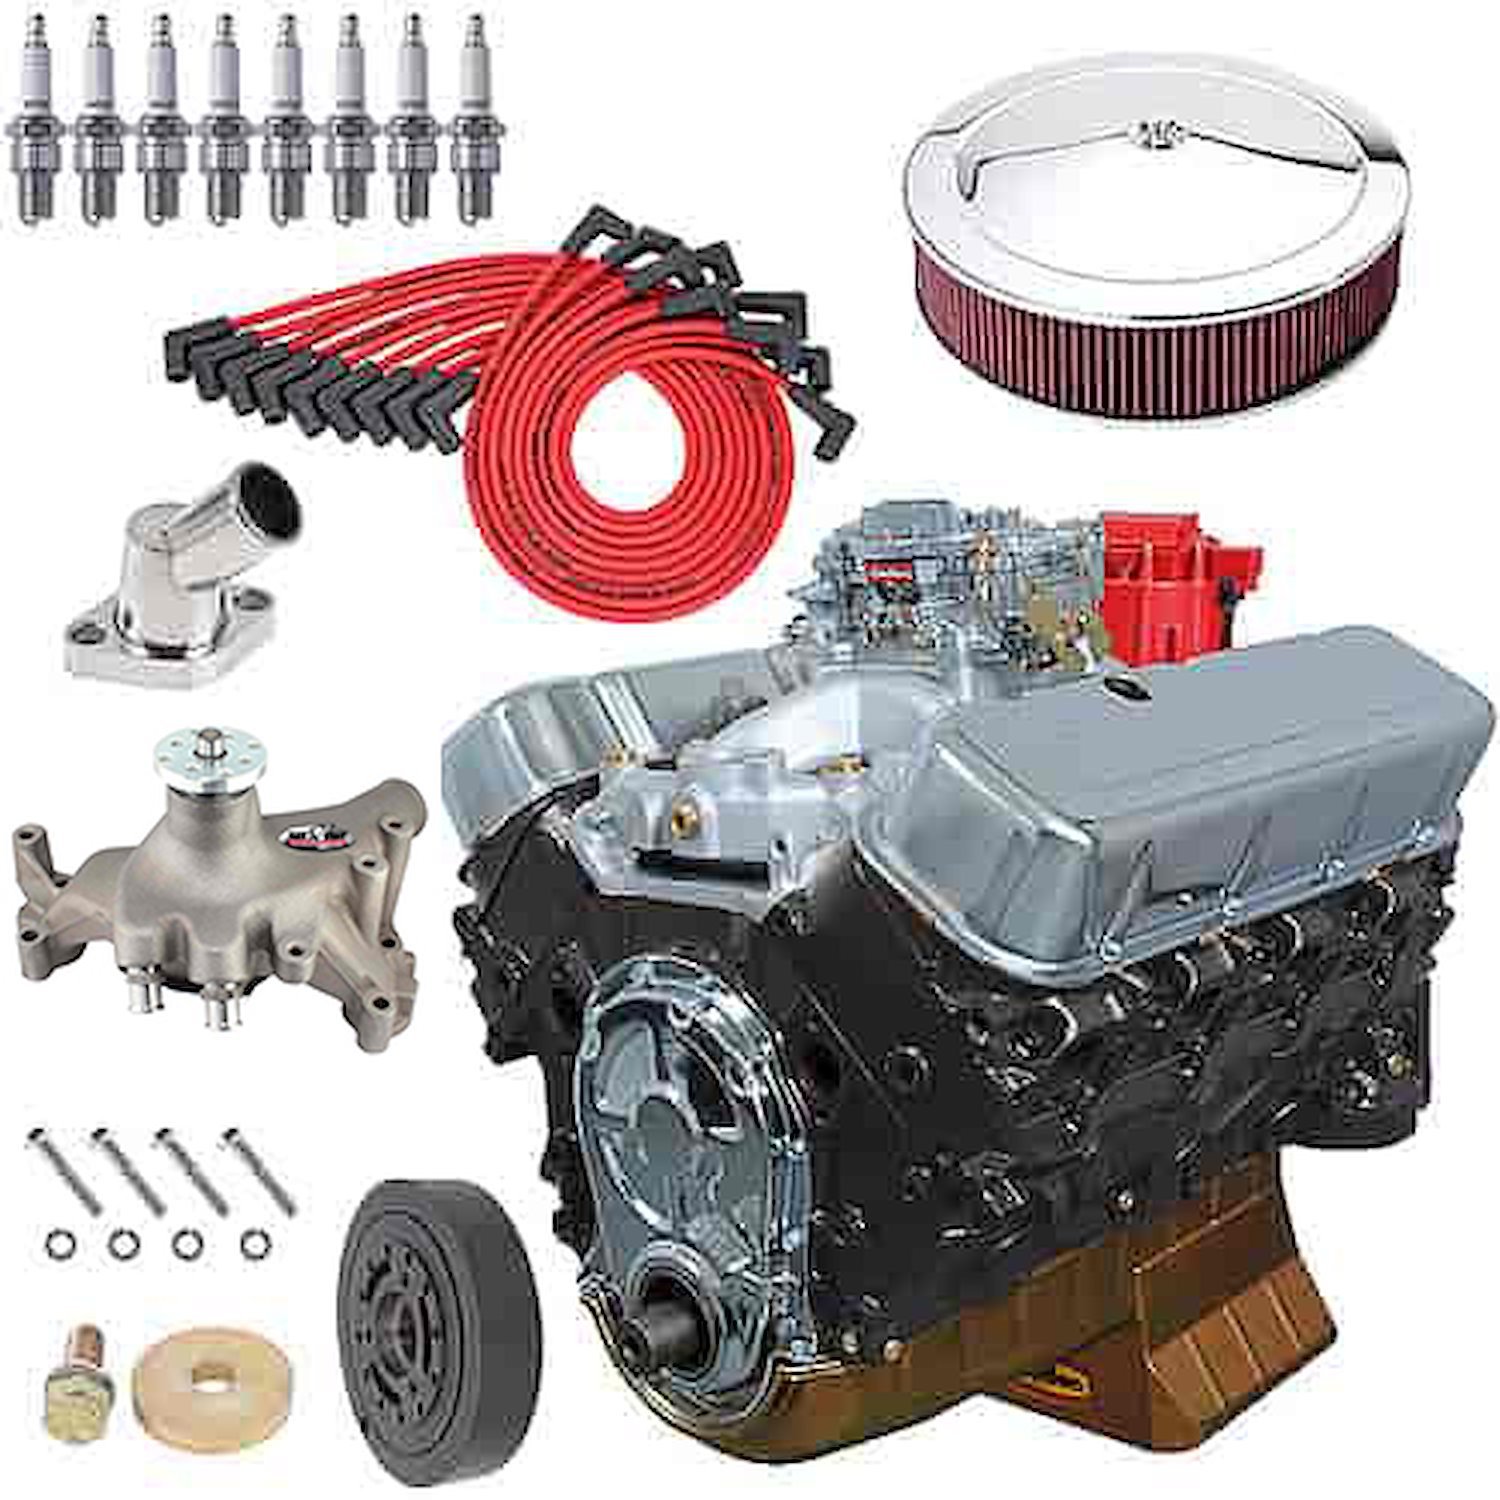 Big Block Chevy 496ci Dress Engine Kit, Includes: